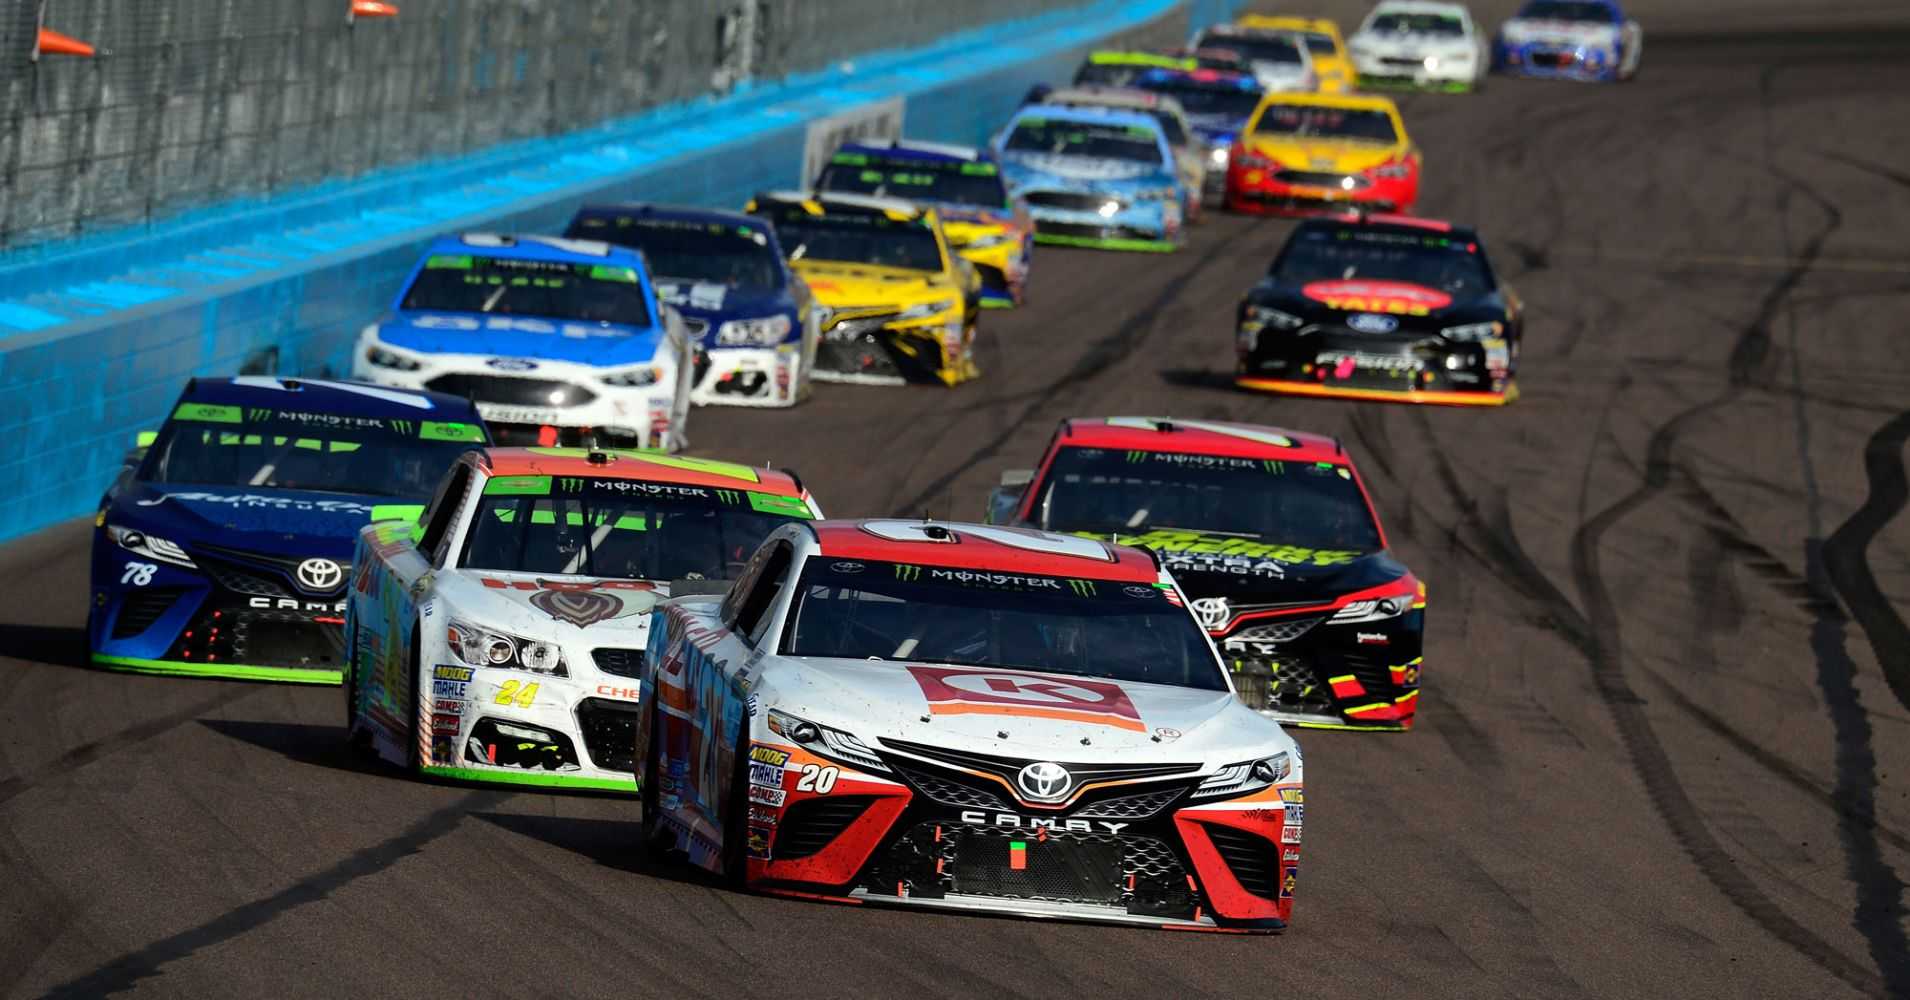  Top 10 Worst NASCAR Paint Schemes 2018